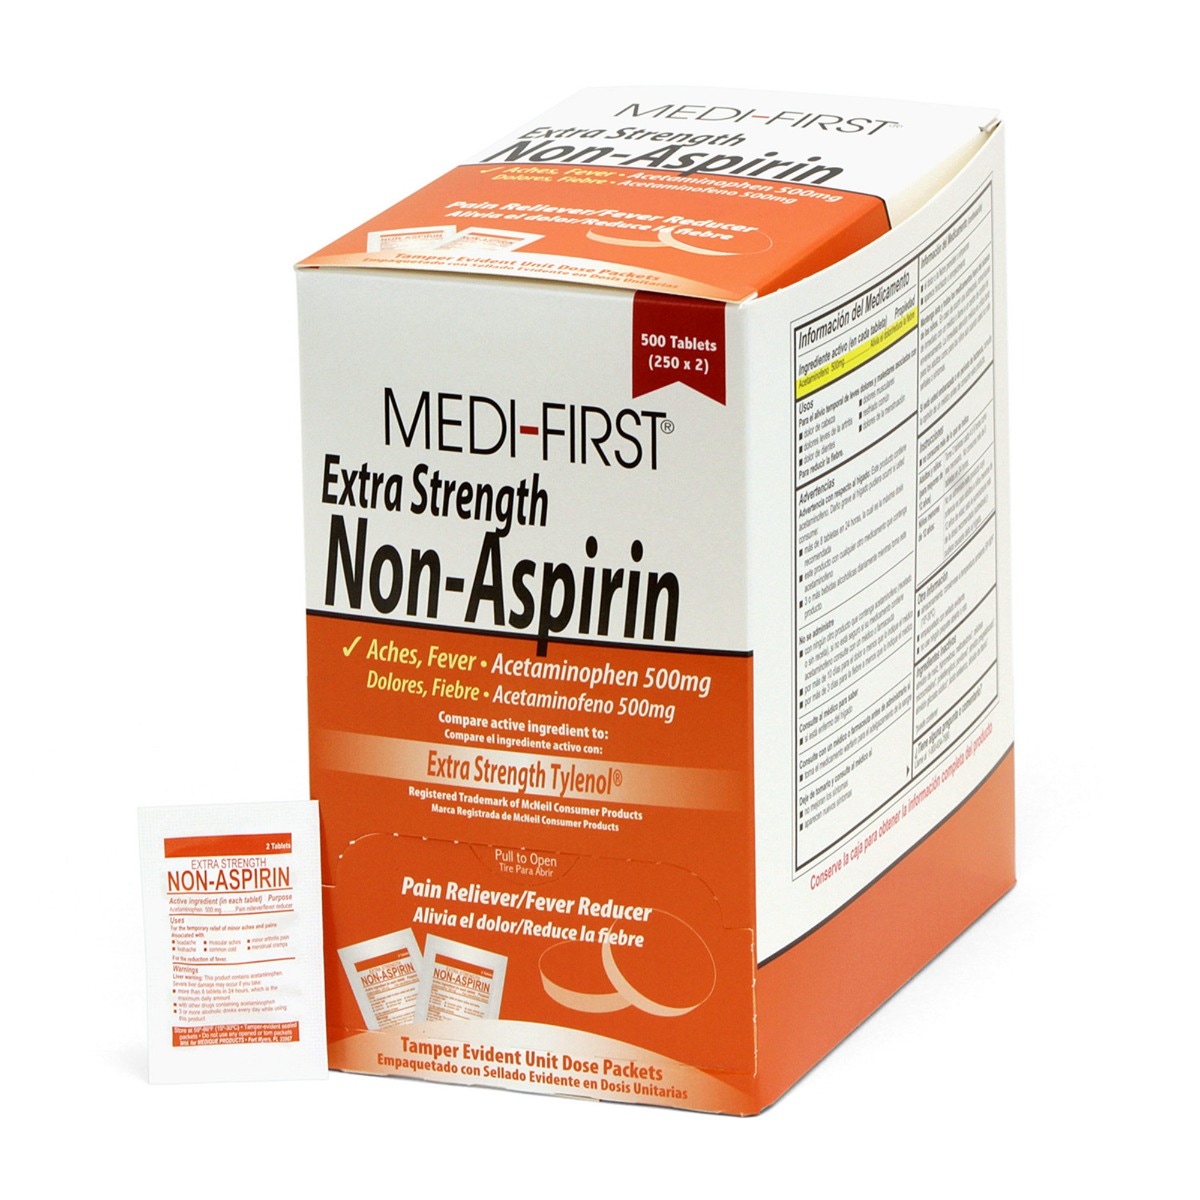 Medi-First Non-Aspirin